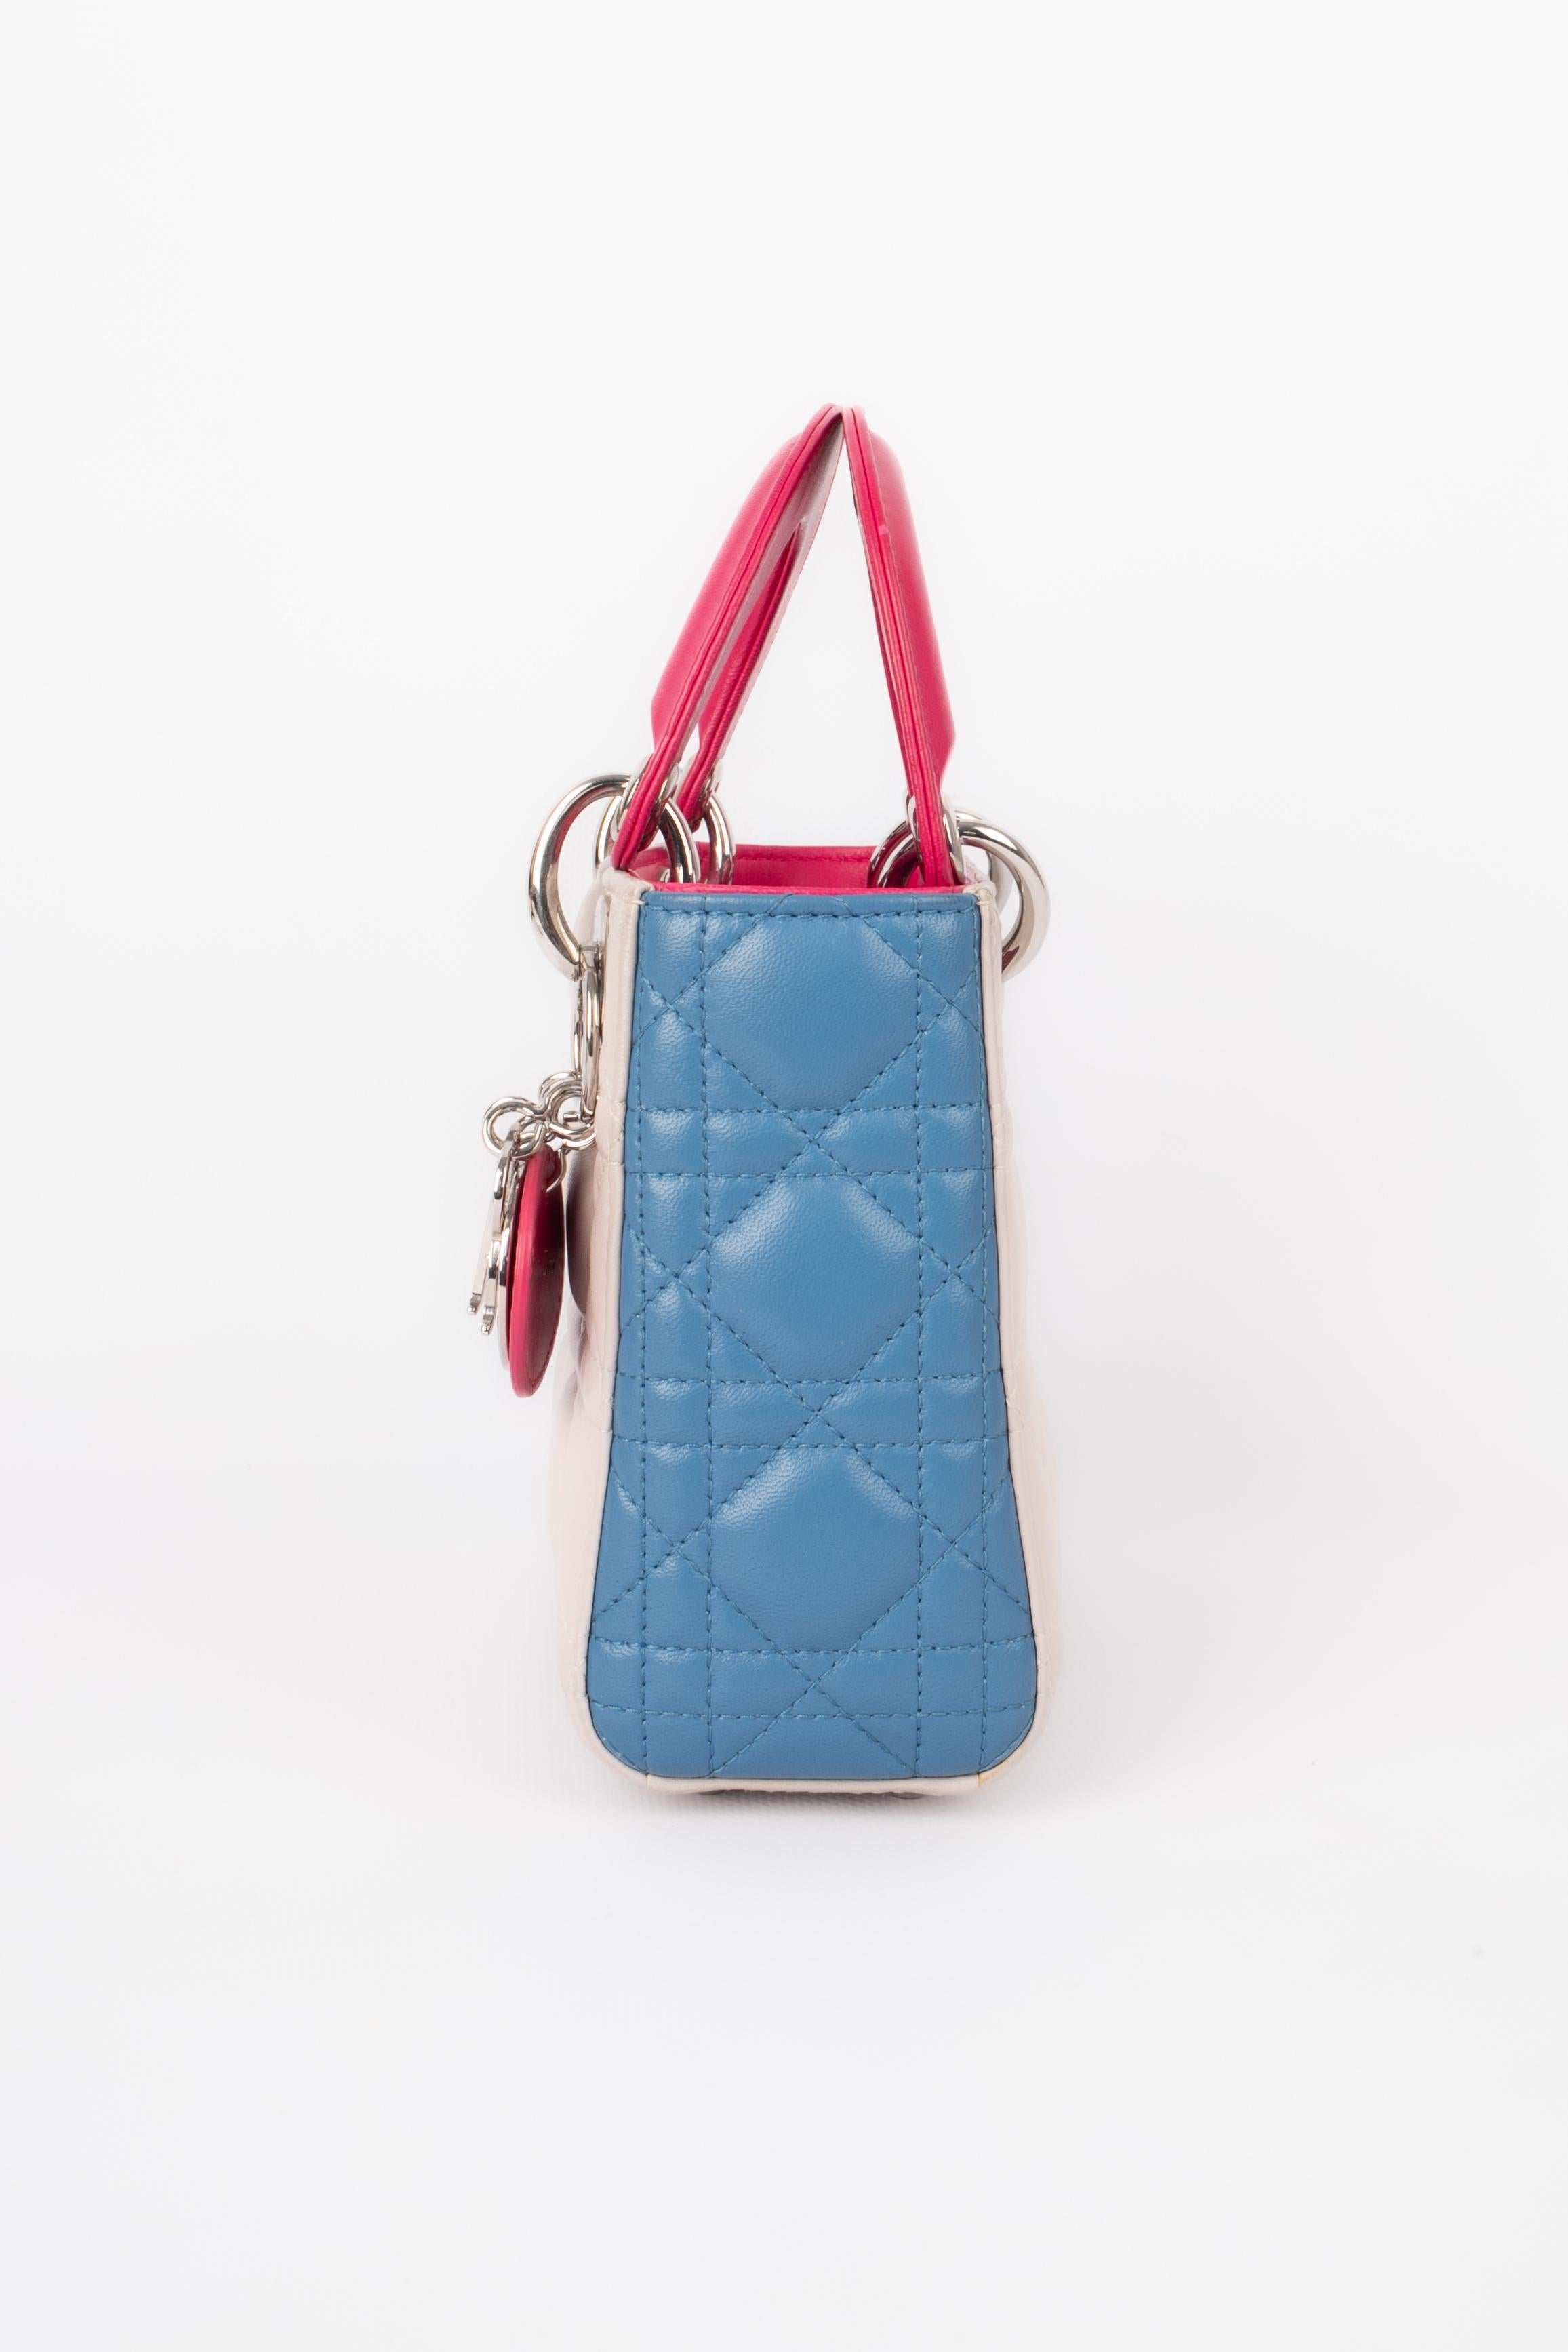 Lady Dior Mini Bag 2014 For Sale 1